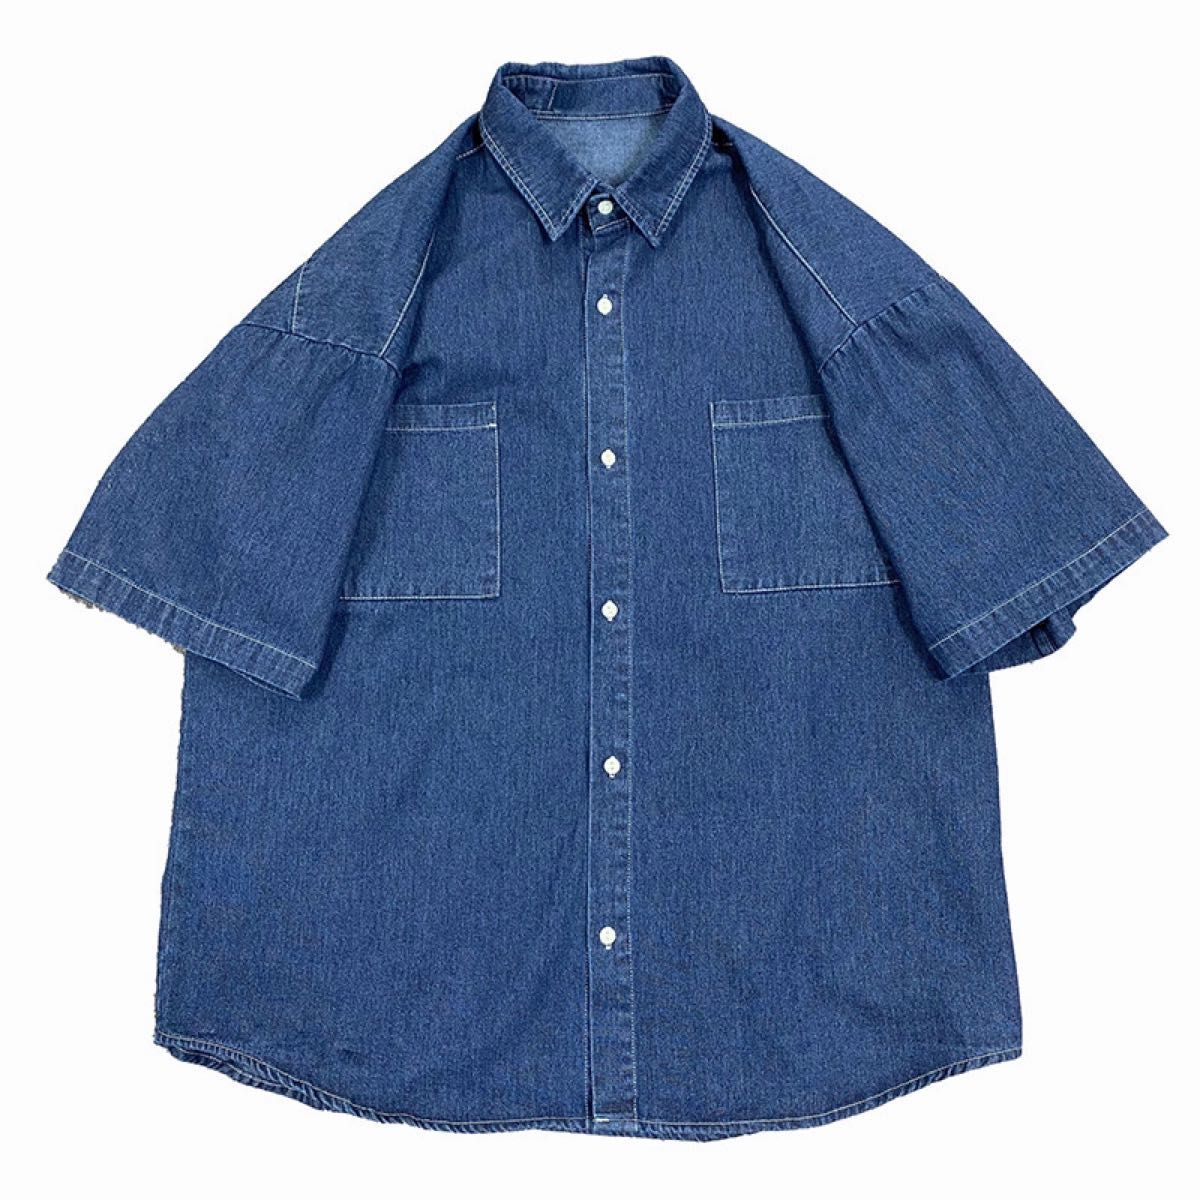 【000511M】ビッグシルエット デニム 半袖 シャツ ブルー Mサイズ 新品 オーバーサイズ 半袖シャツ 素材 ビンテージ